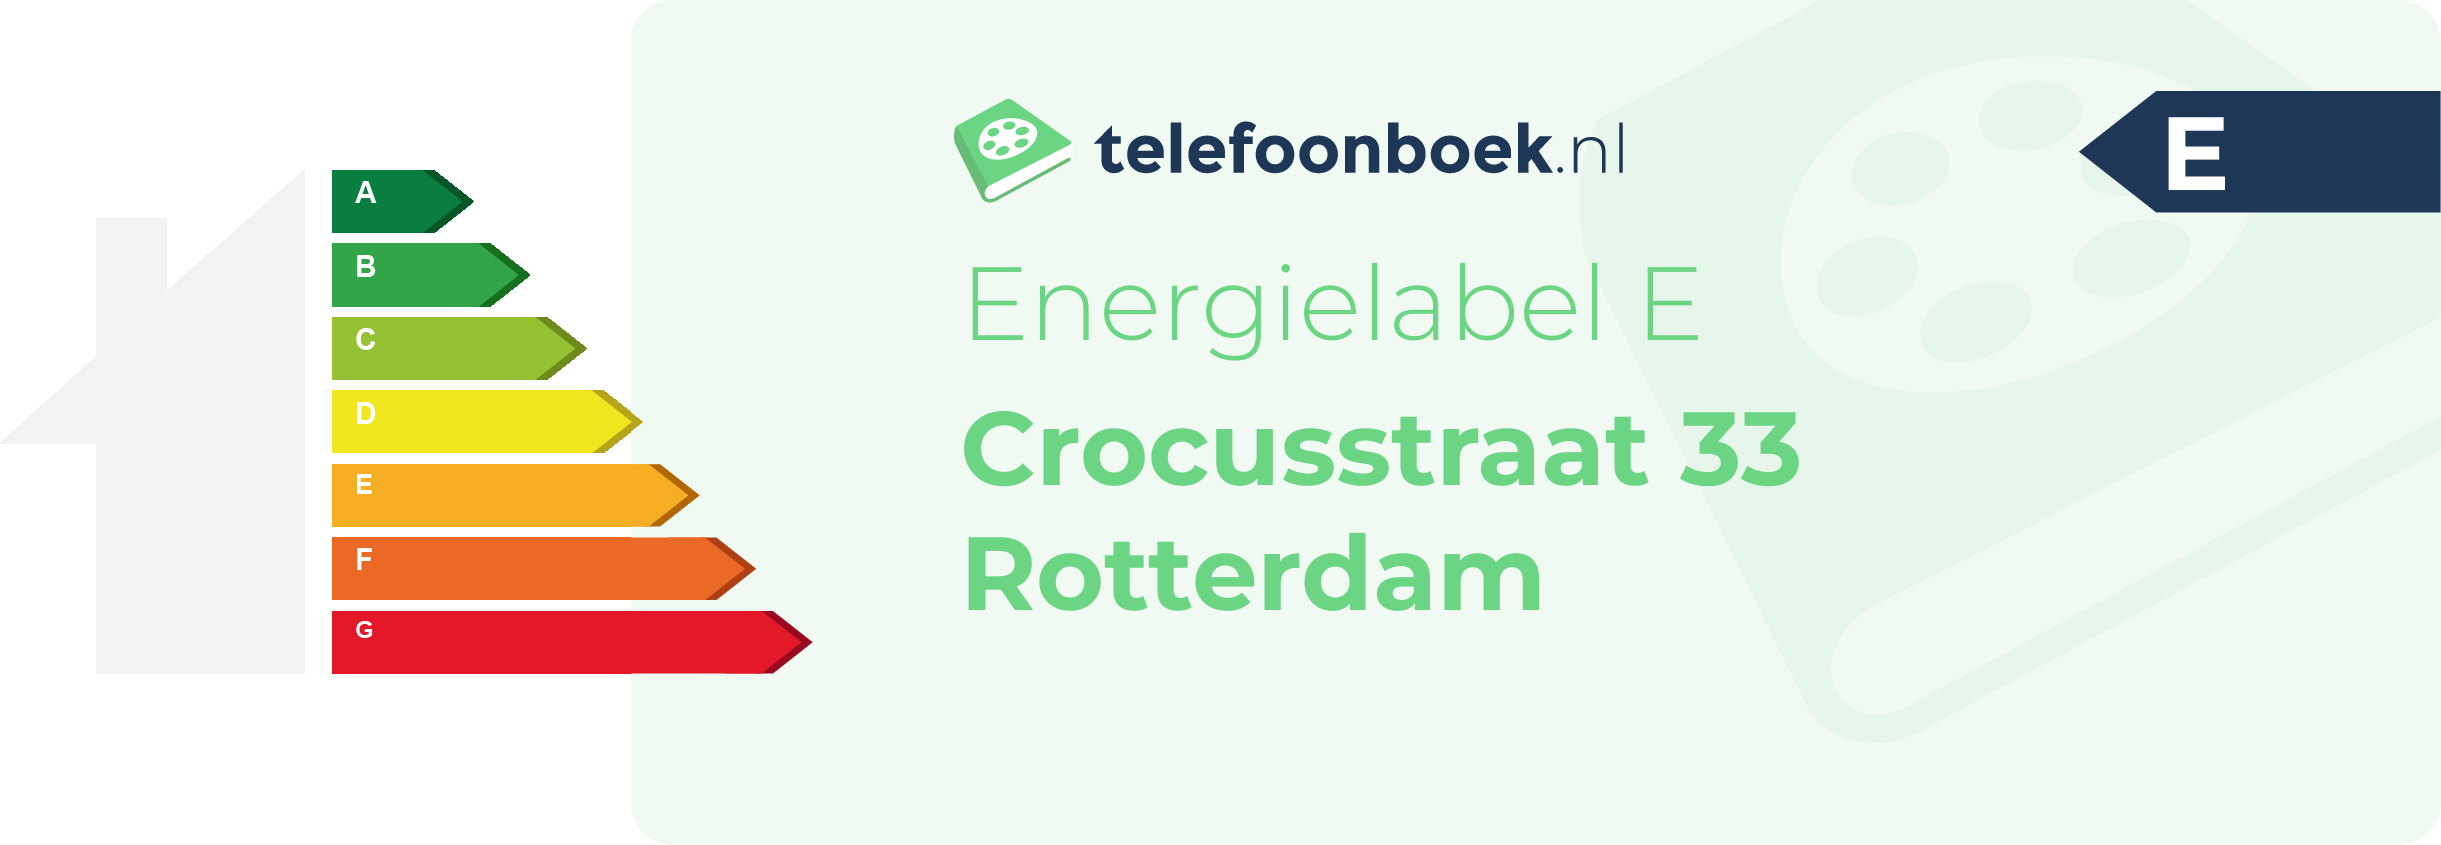 Energielabel Crocusstraat 33 Rotterdam